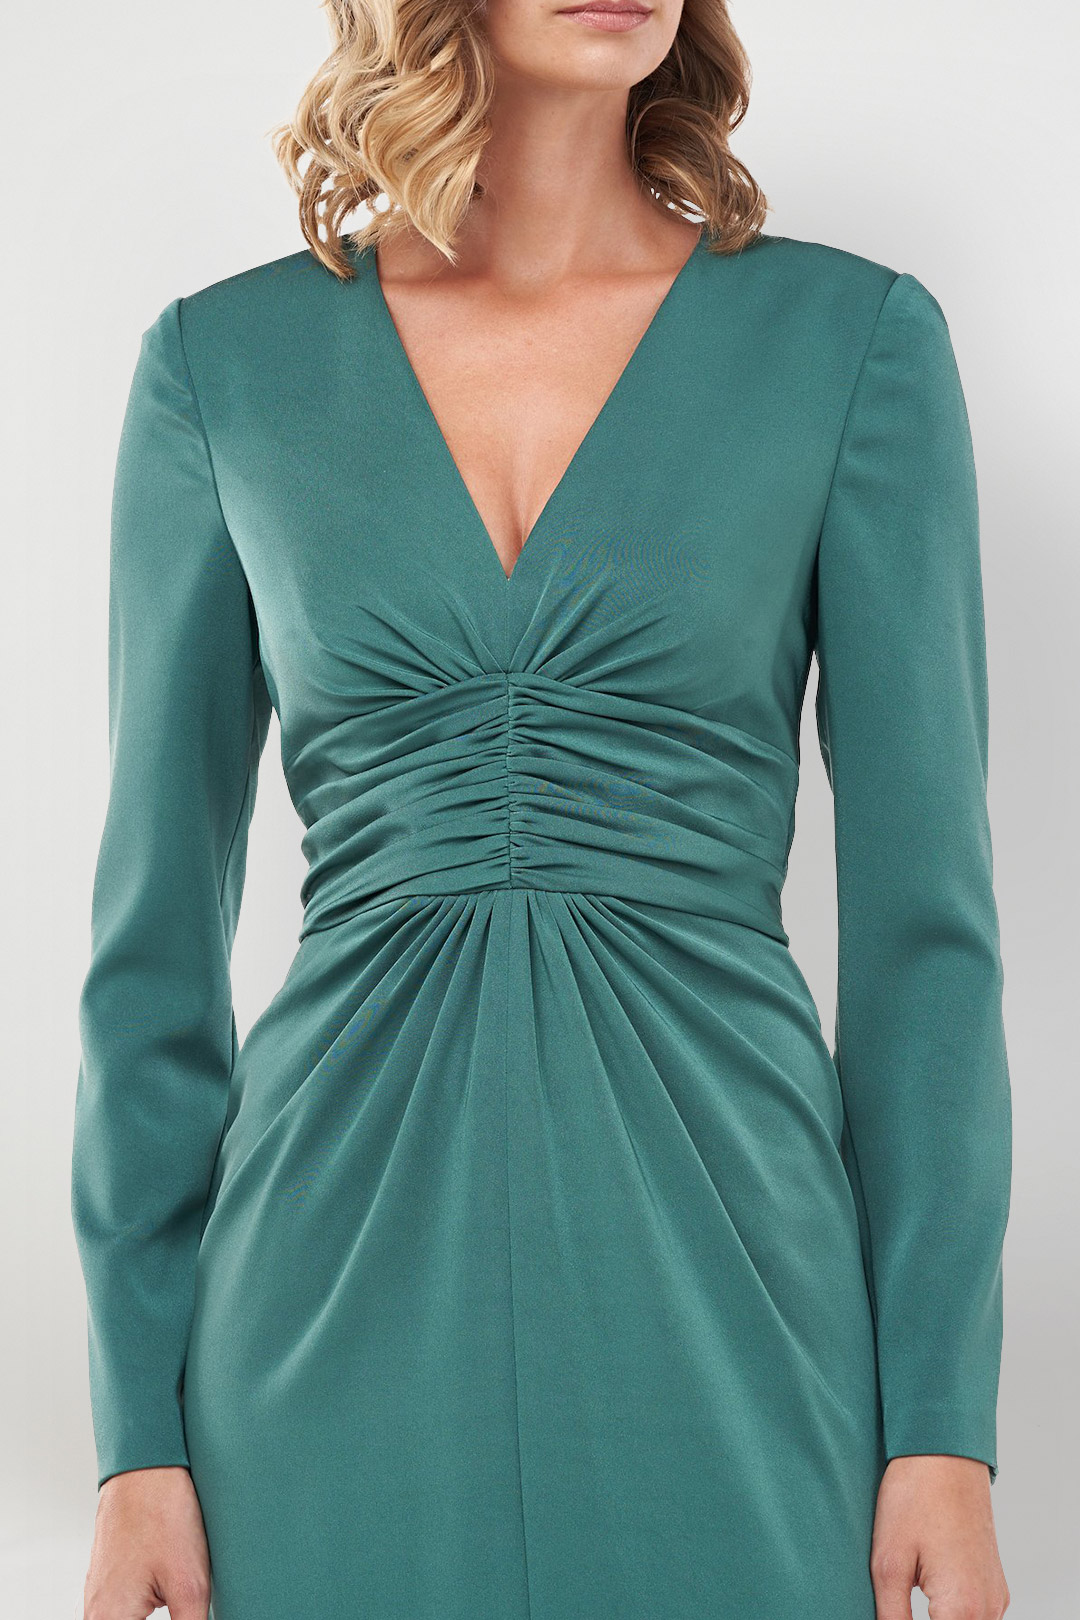 Rent A Dress Kayla Gown - Kay Unger Dress Rental